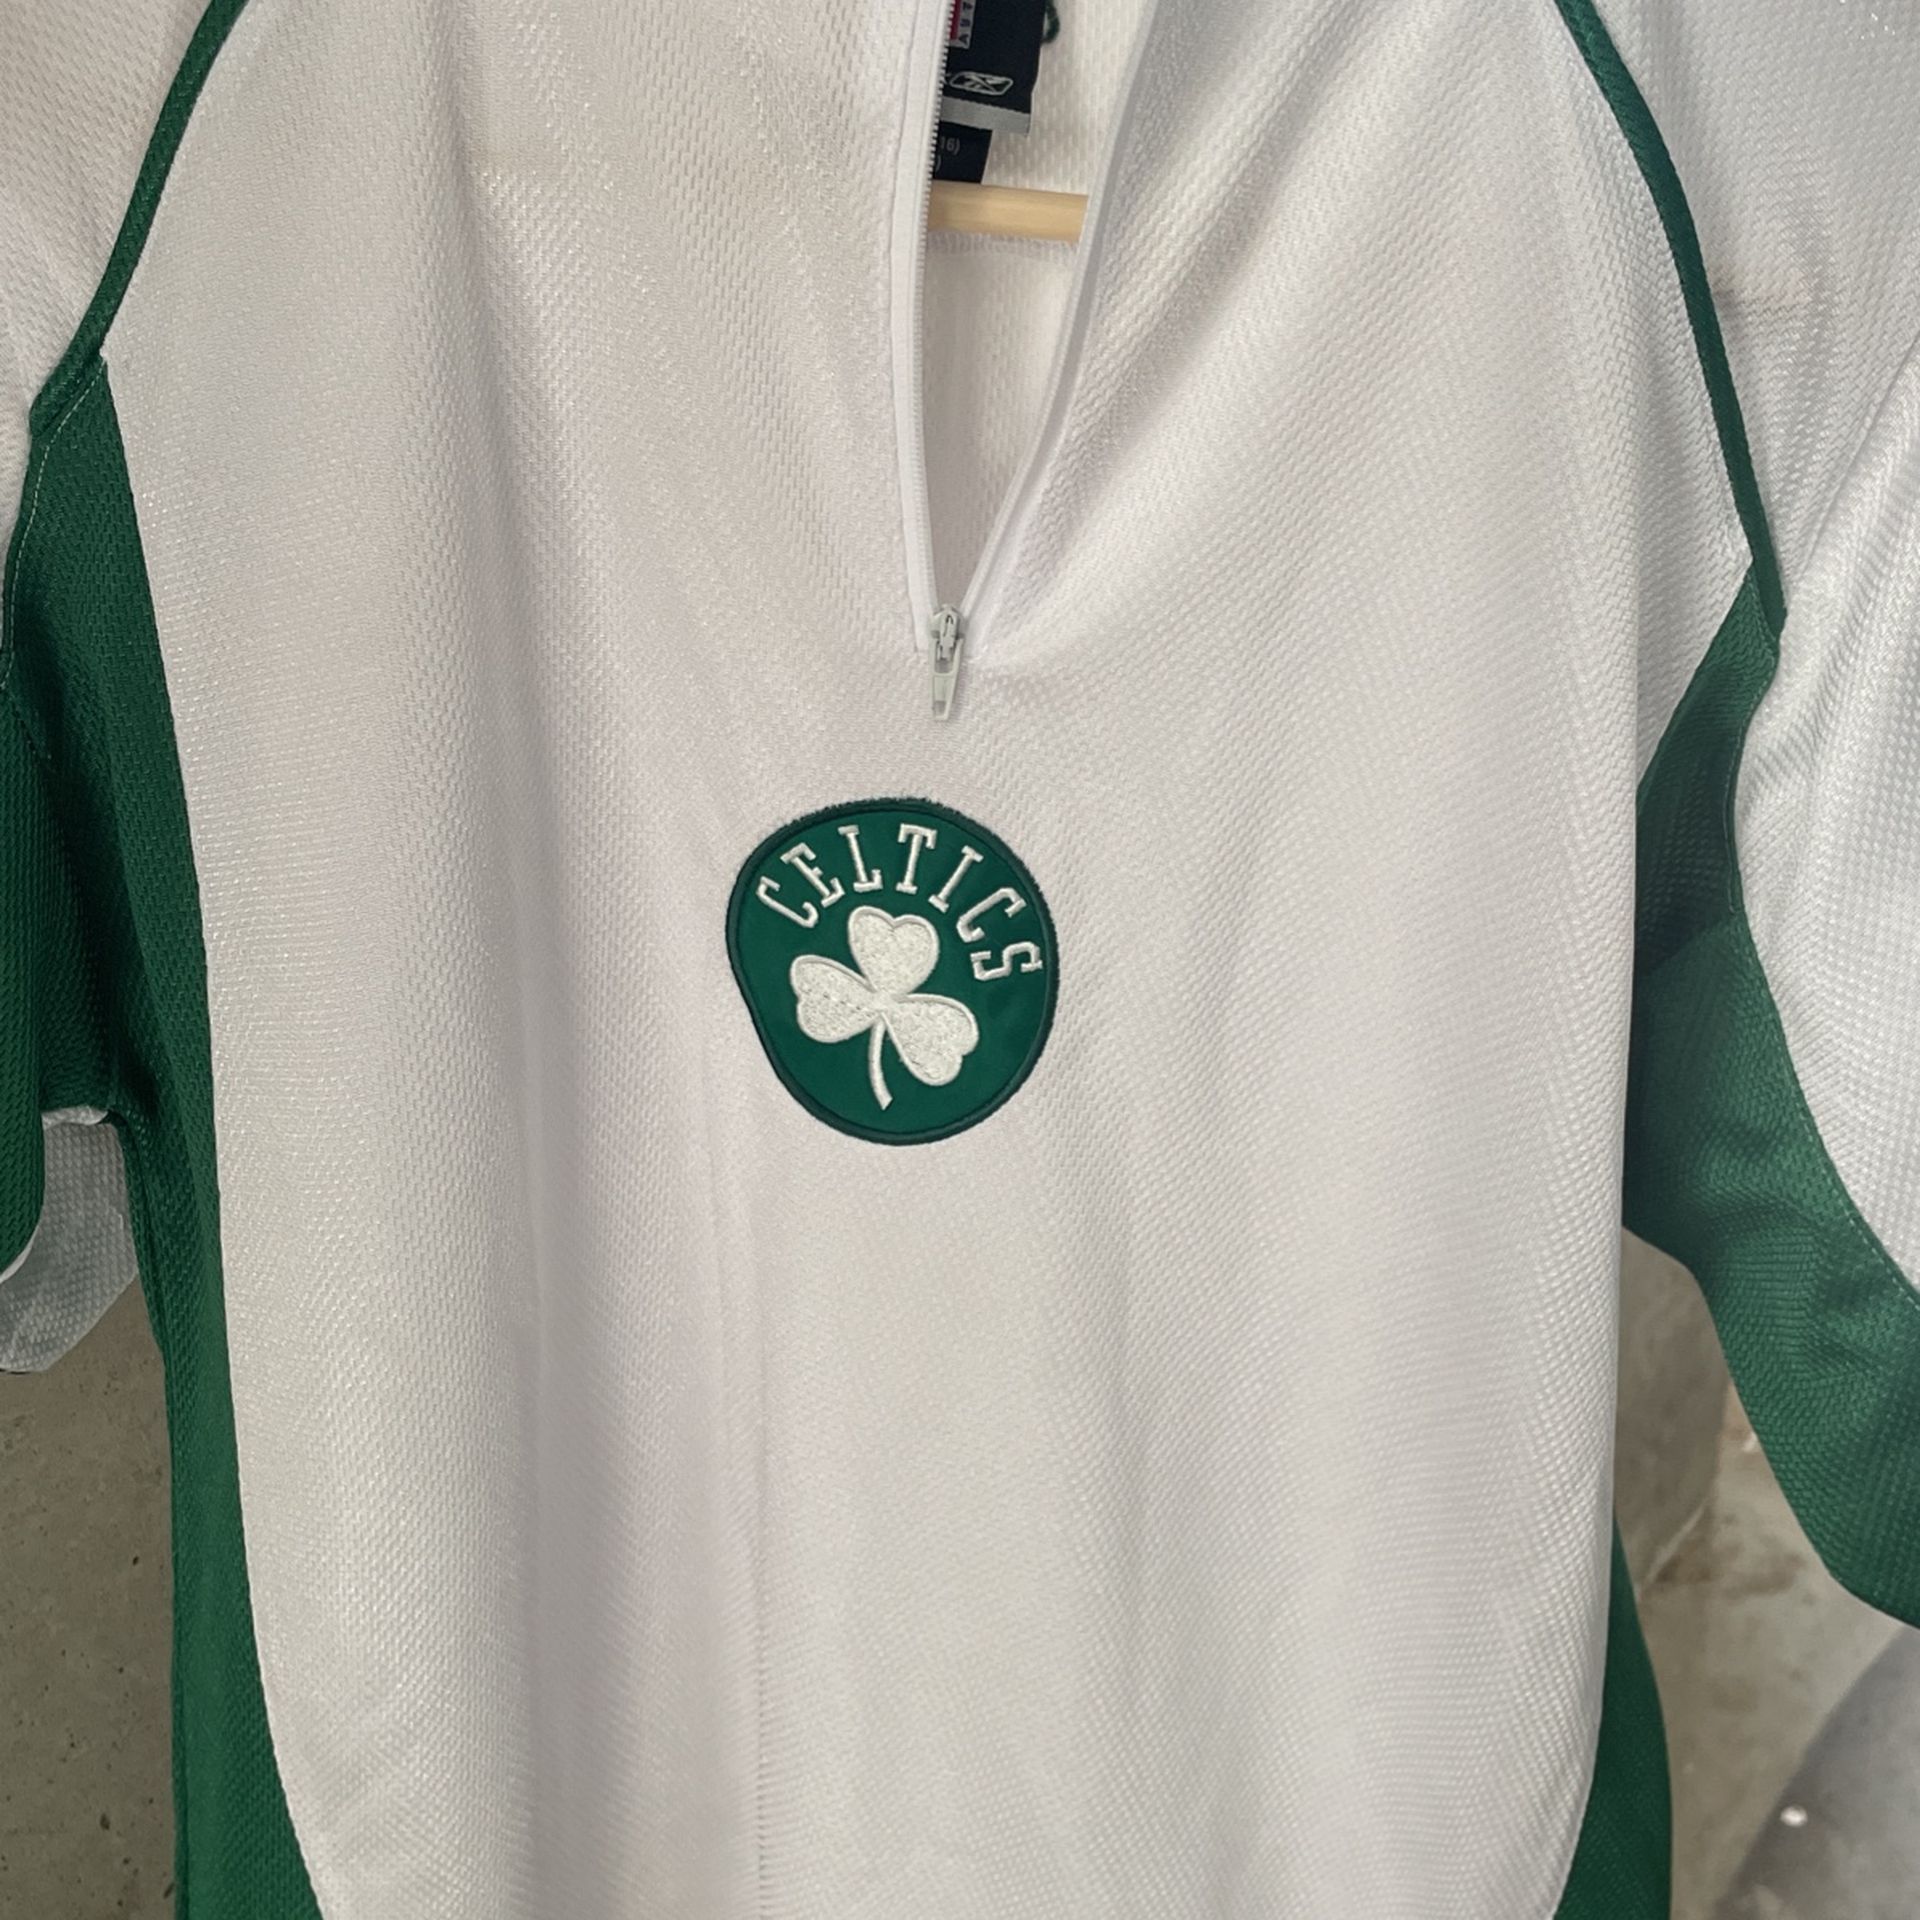 Celtics Zip Up Shirt $10 Boys L 14-16